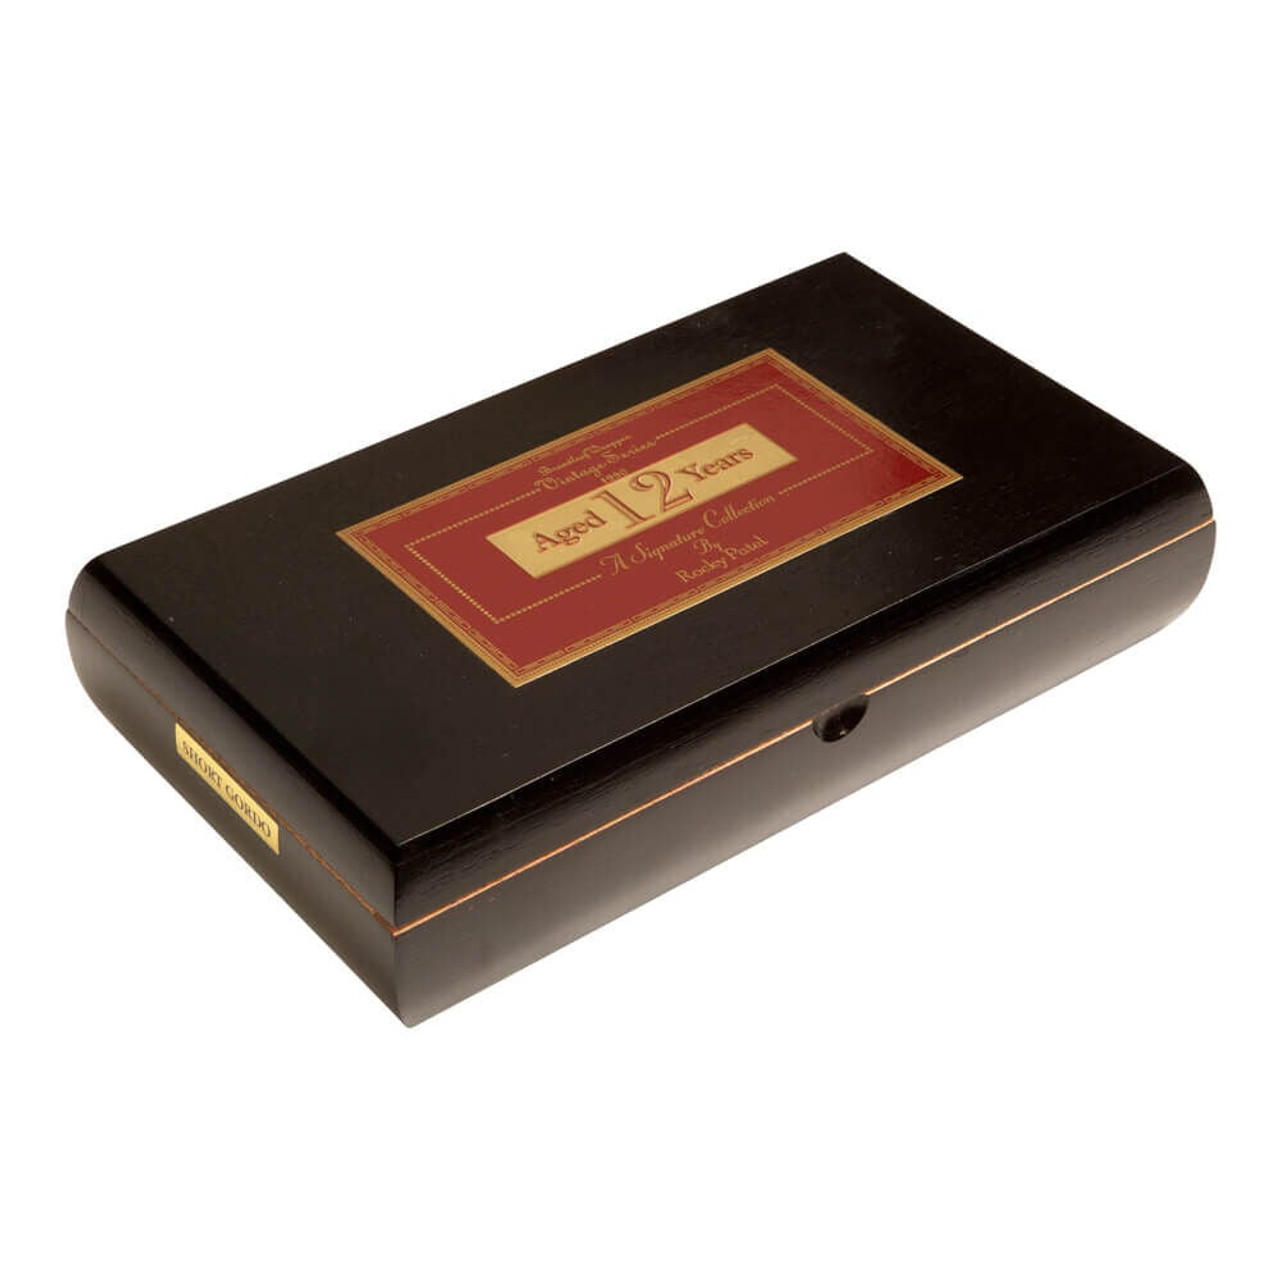 Rocky Patel Vintage 1990 Perfecto Cigars - 4 x 48 (Box of 20) *Box